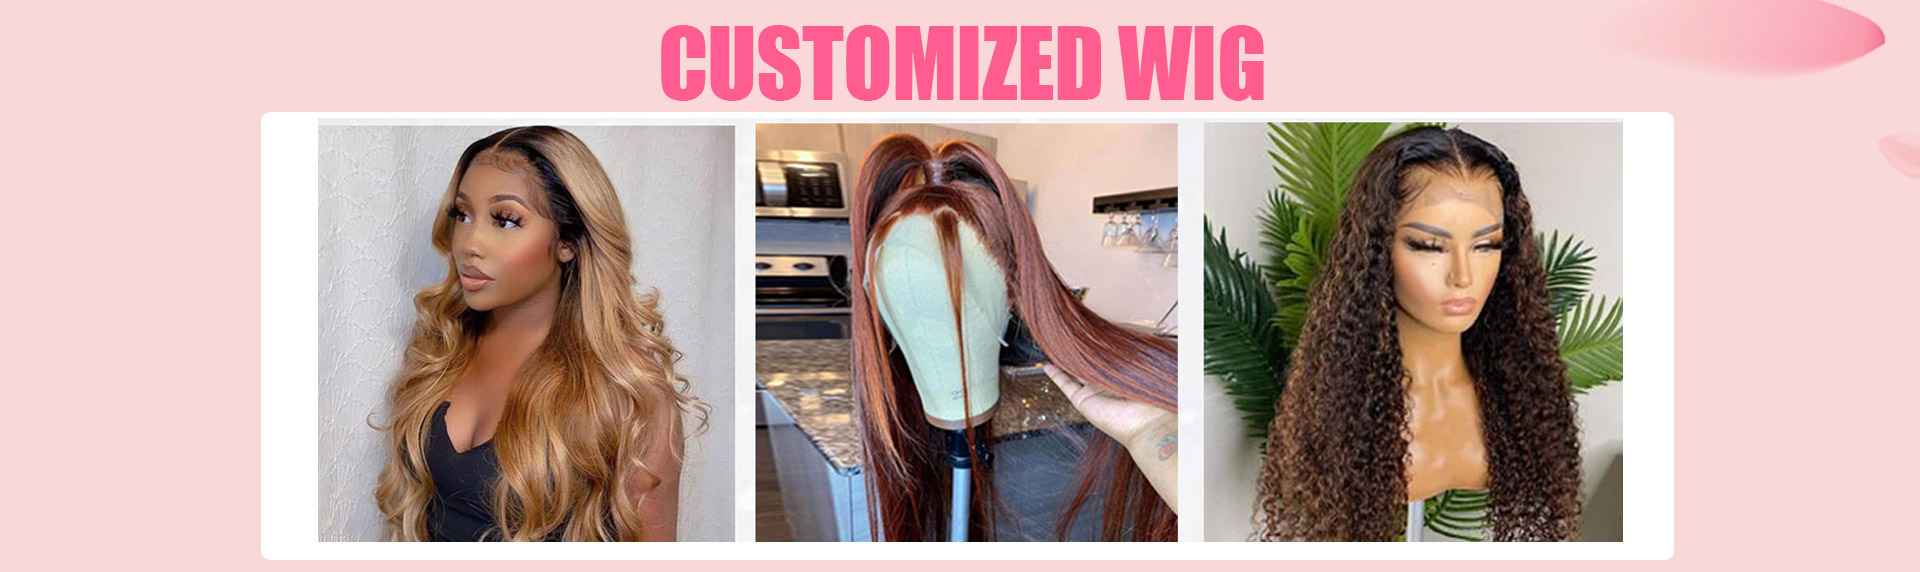 customized-wigs